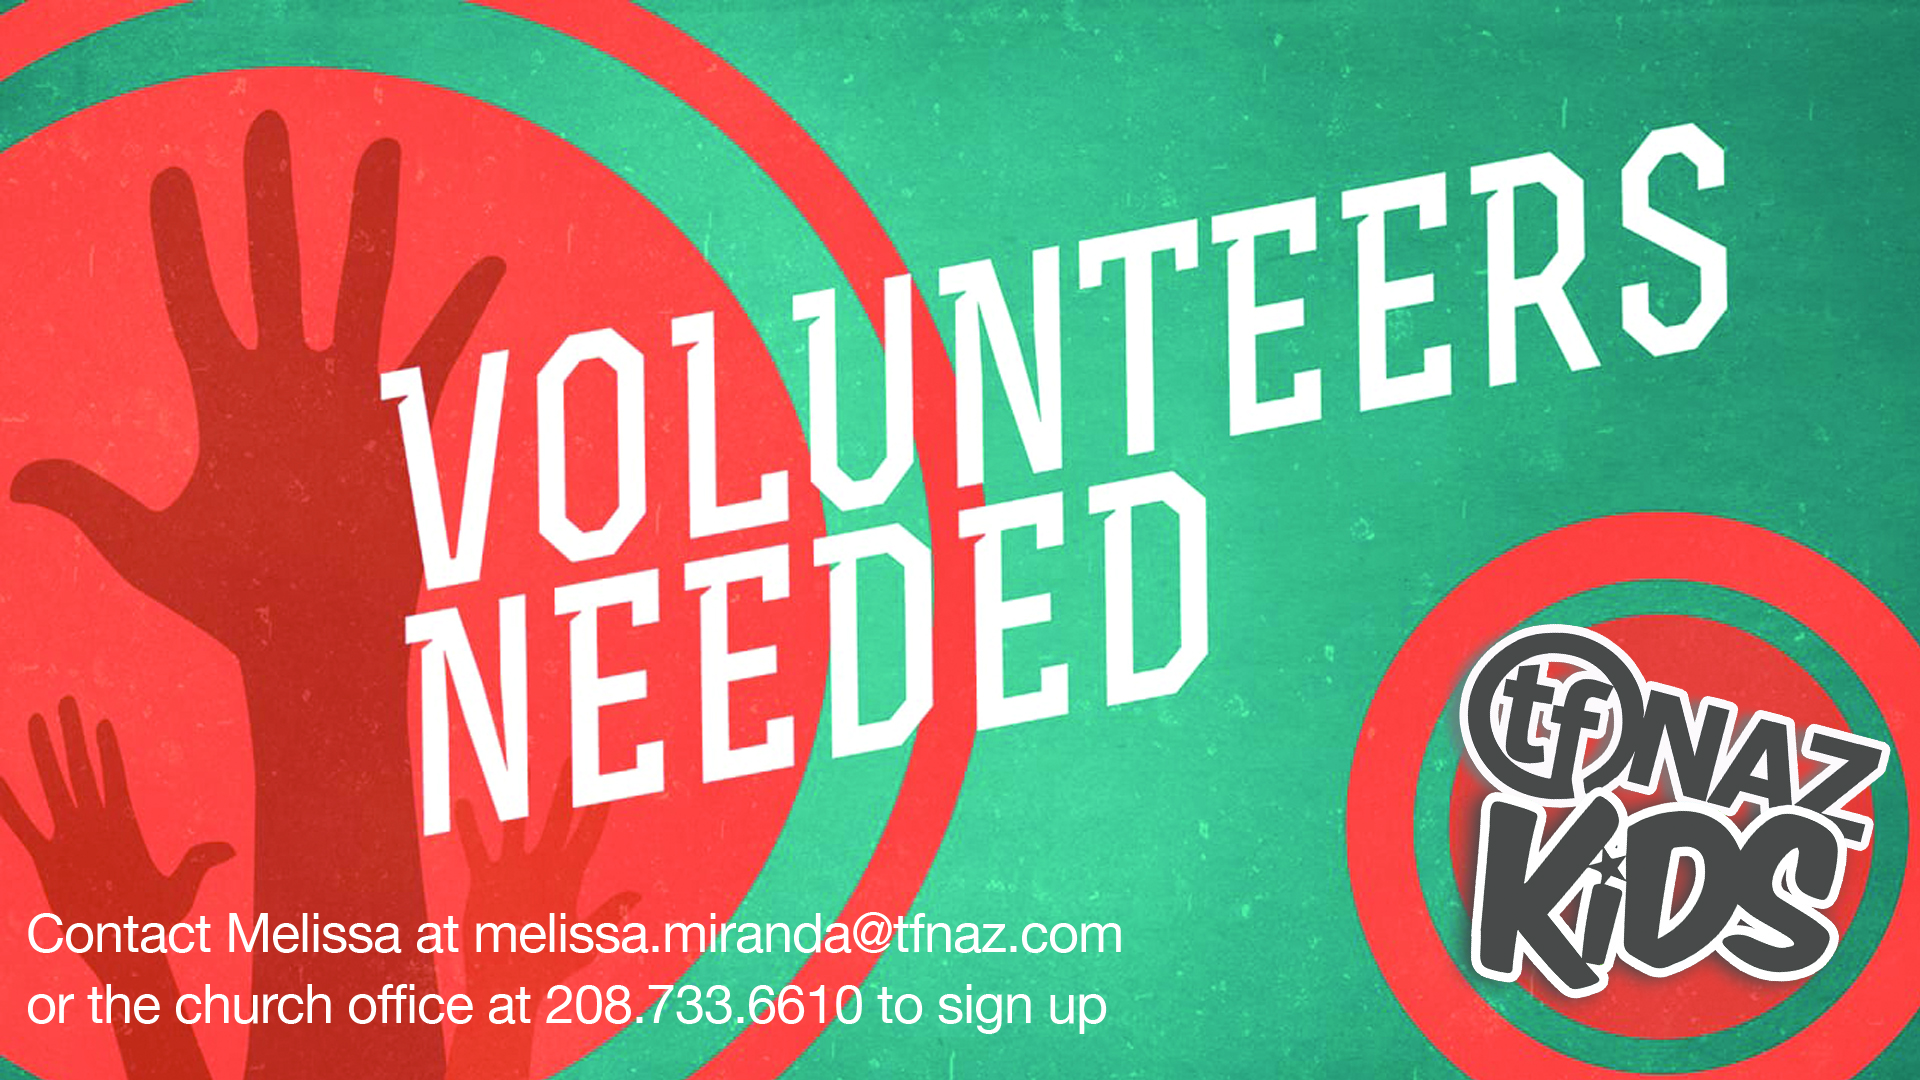 Volunteers Needed, Call 208-733-6610